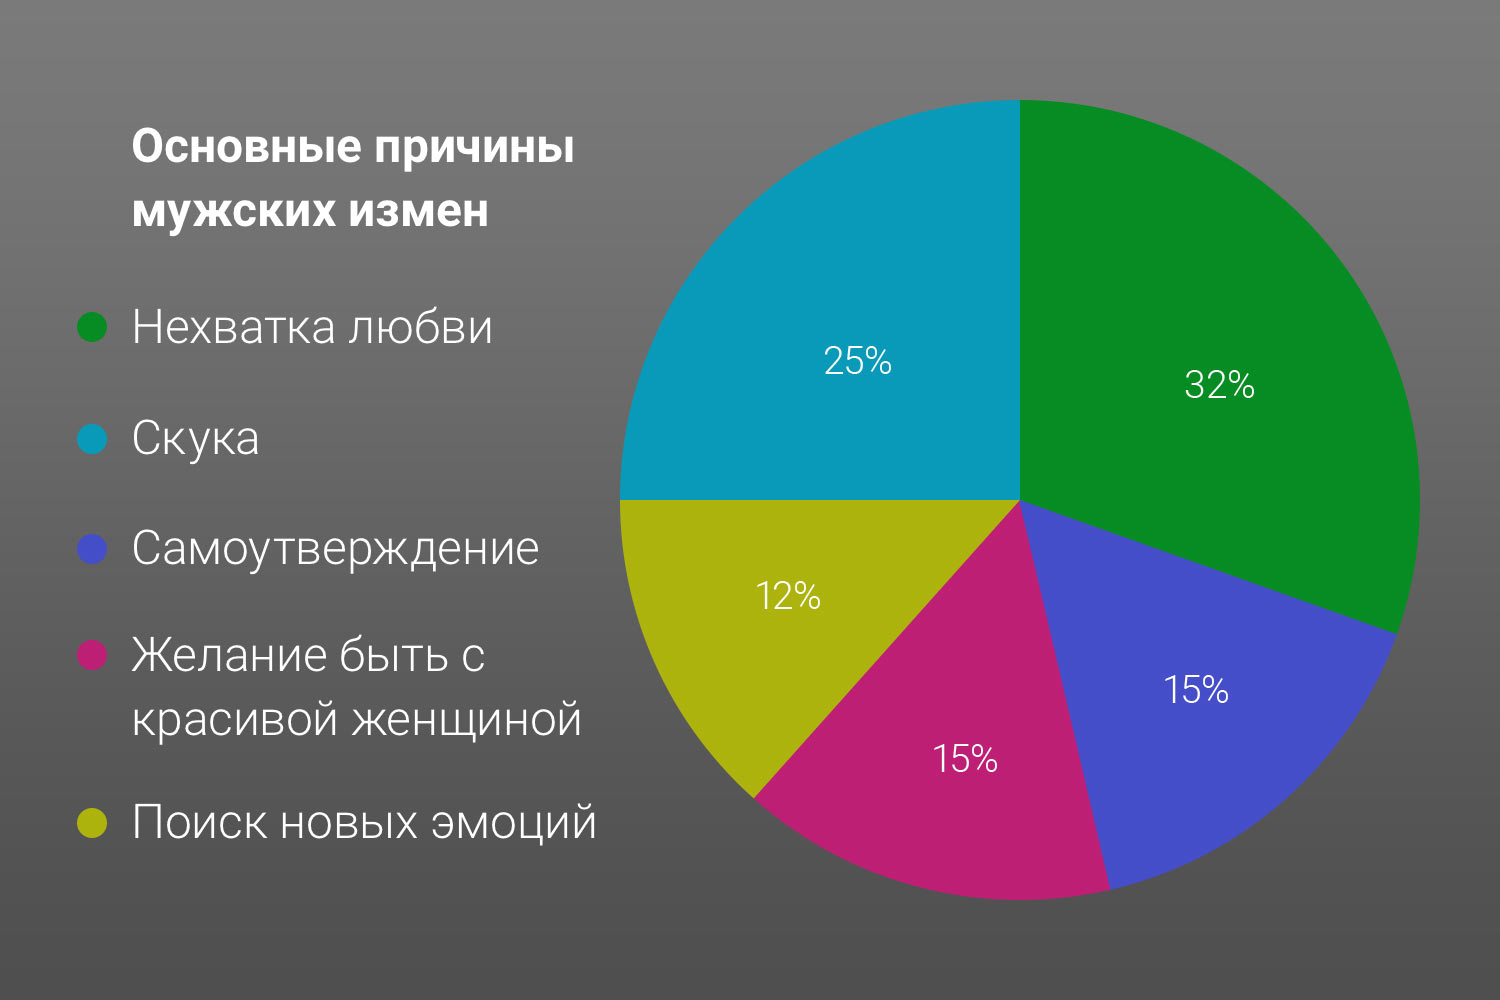 статистика супружеских измен по россии фото 2